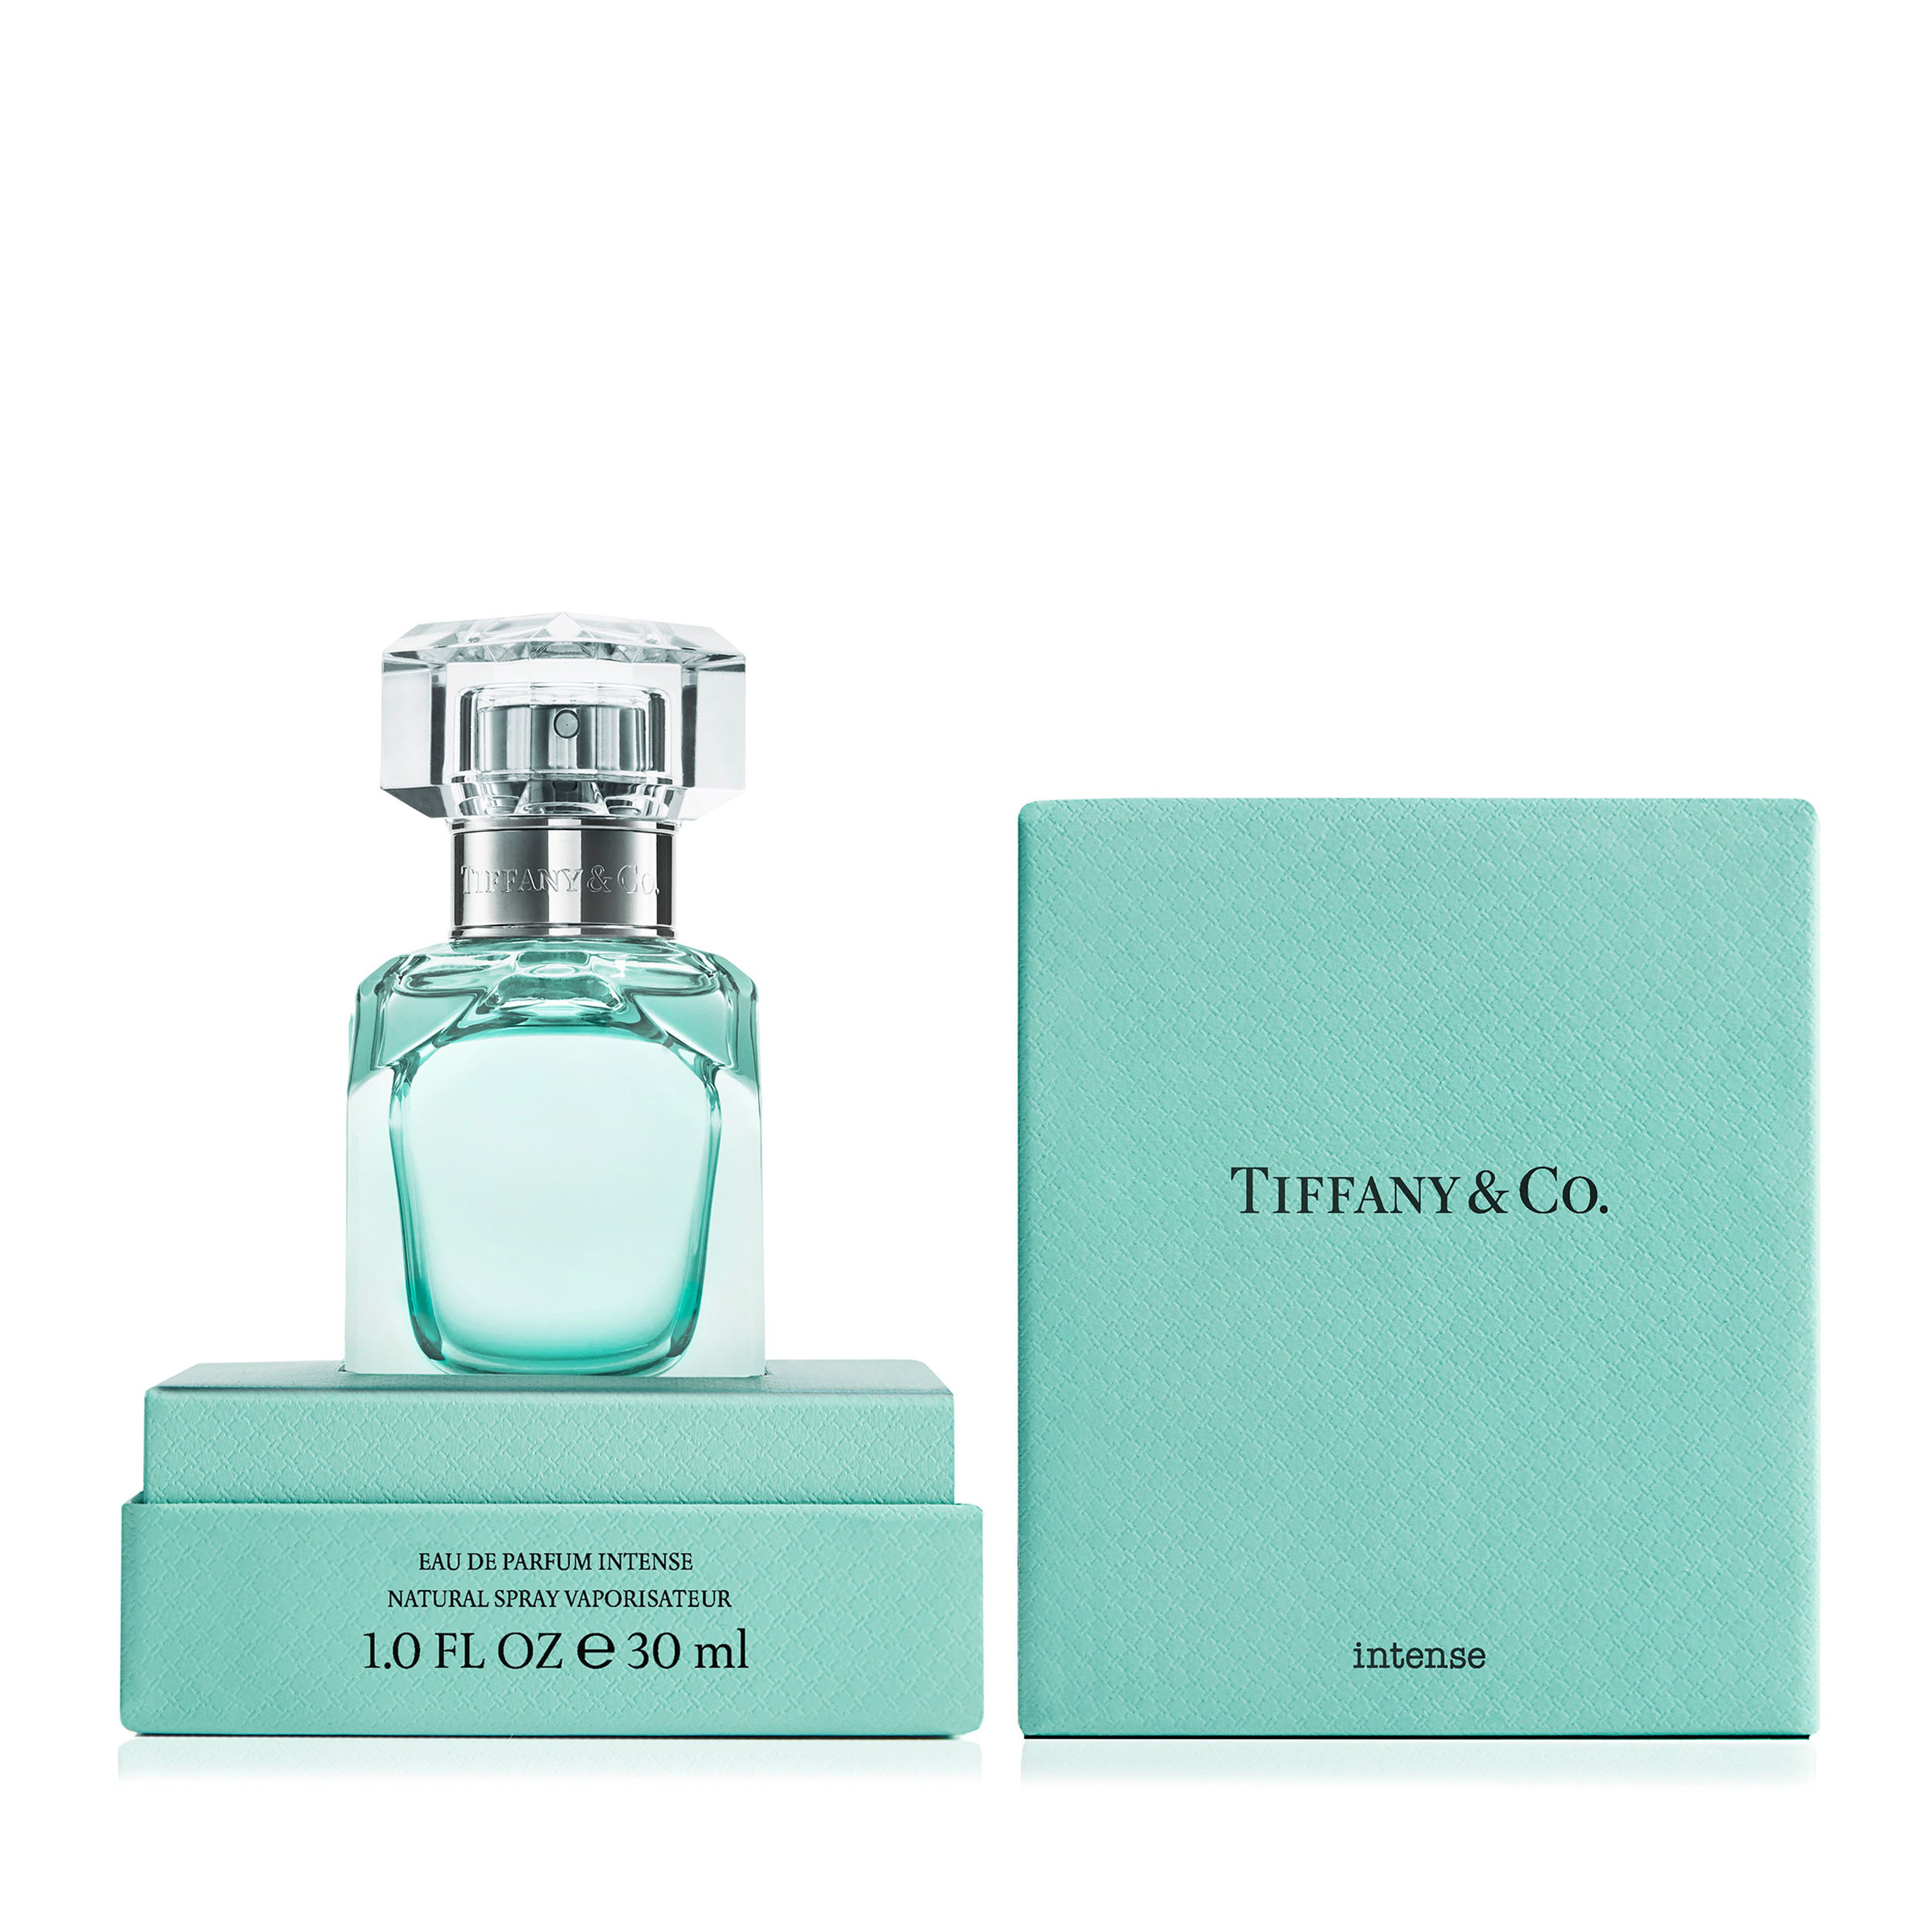 Tiffany Tiffany & Co. Eau De Parfum Intense 3